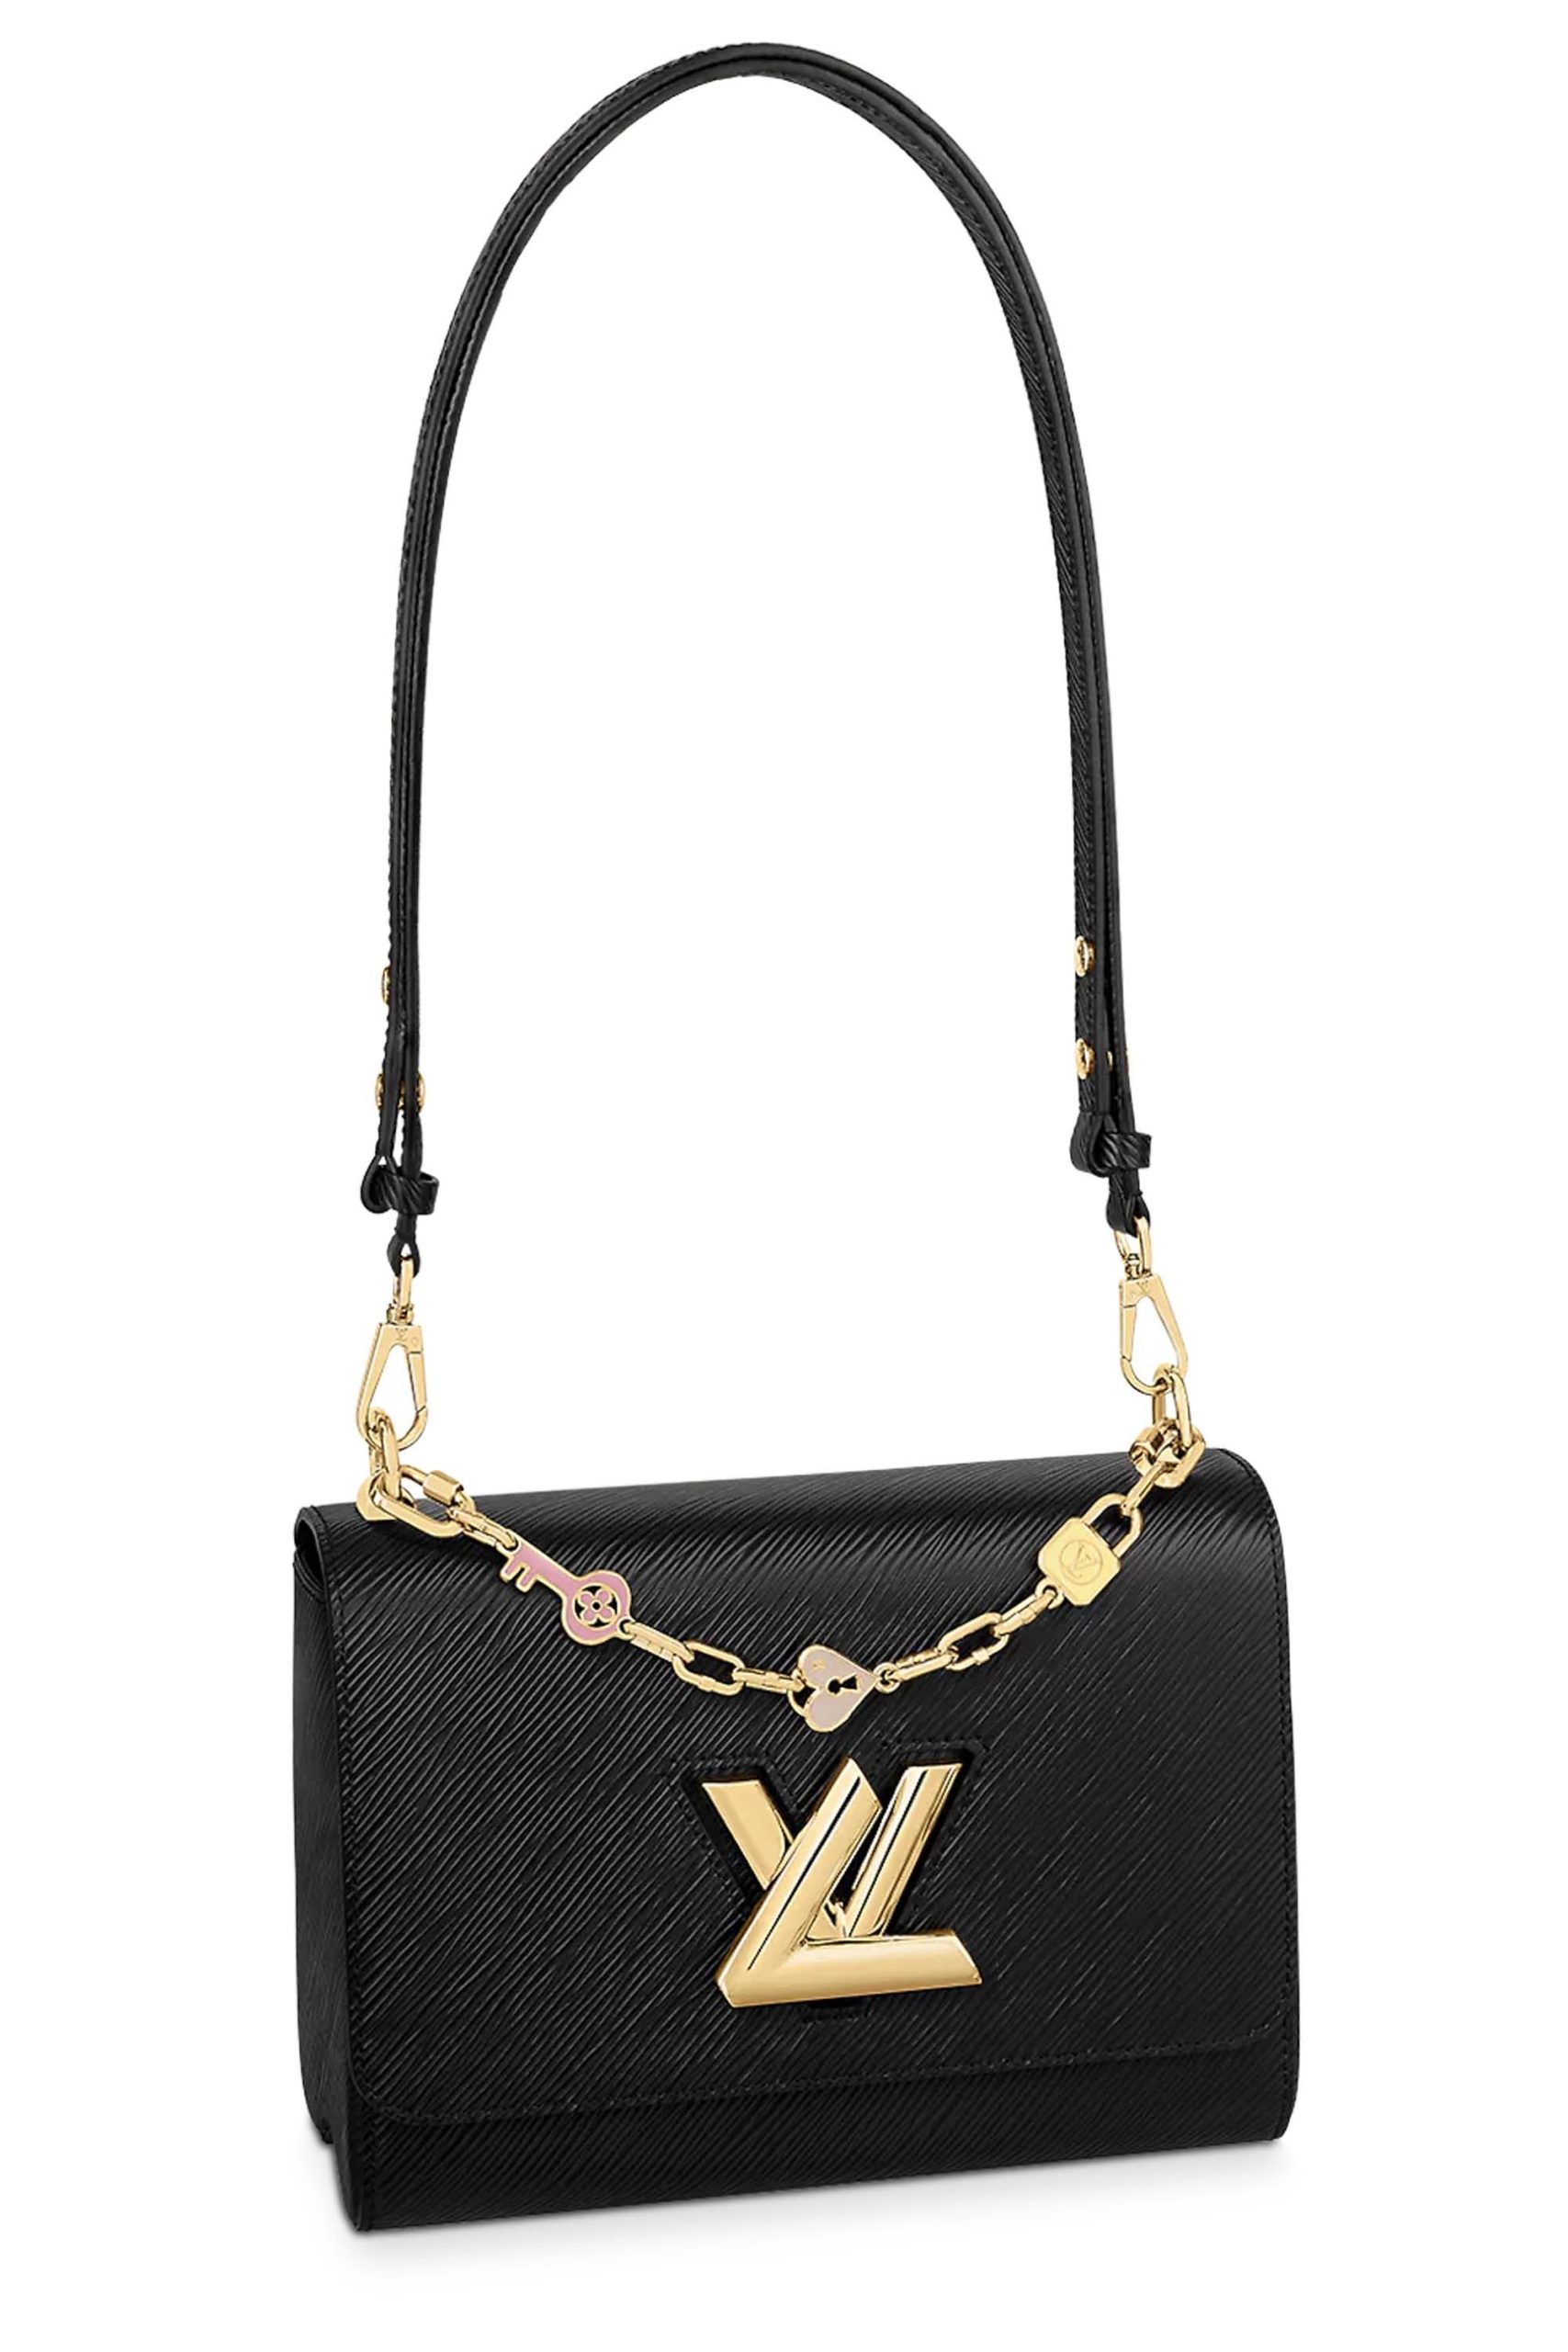 Shop Stylish Handbags for Women | ALDO, Guess & Nine West